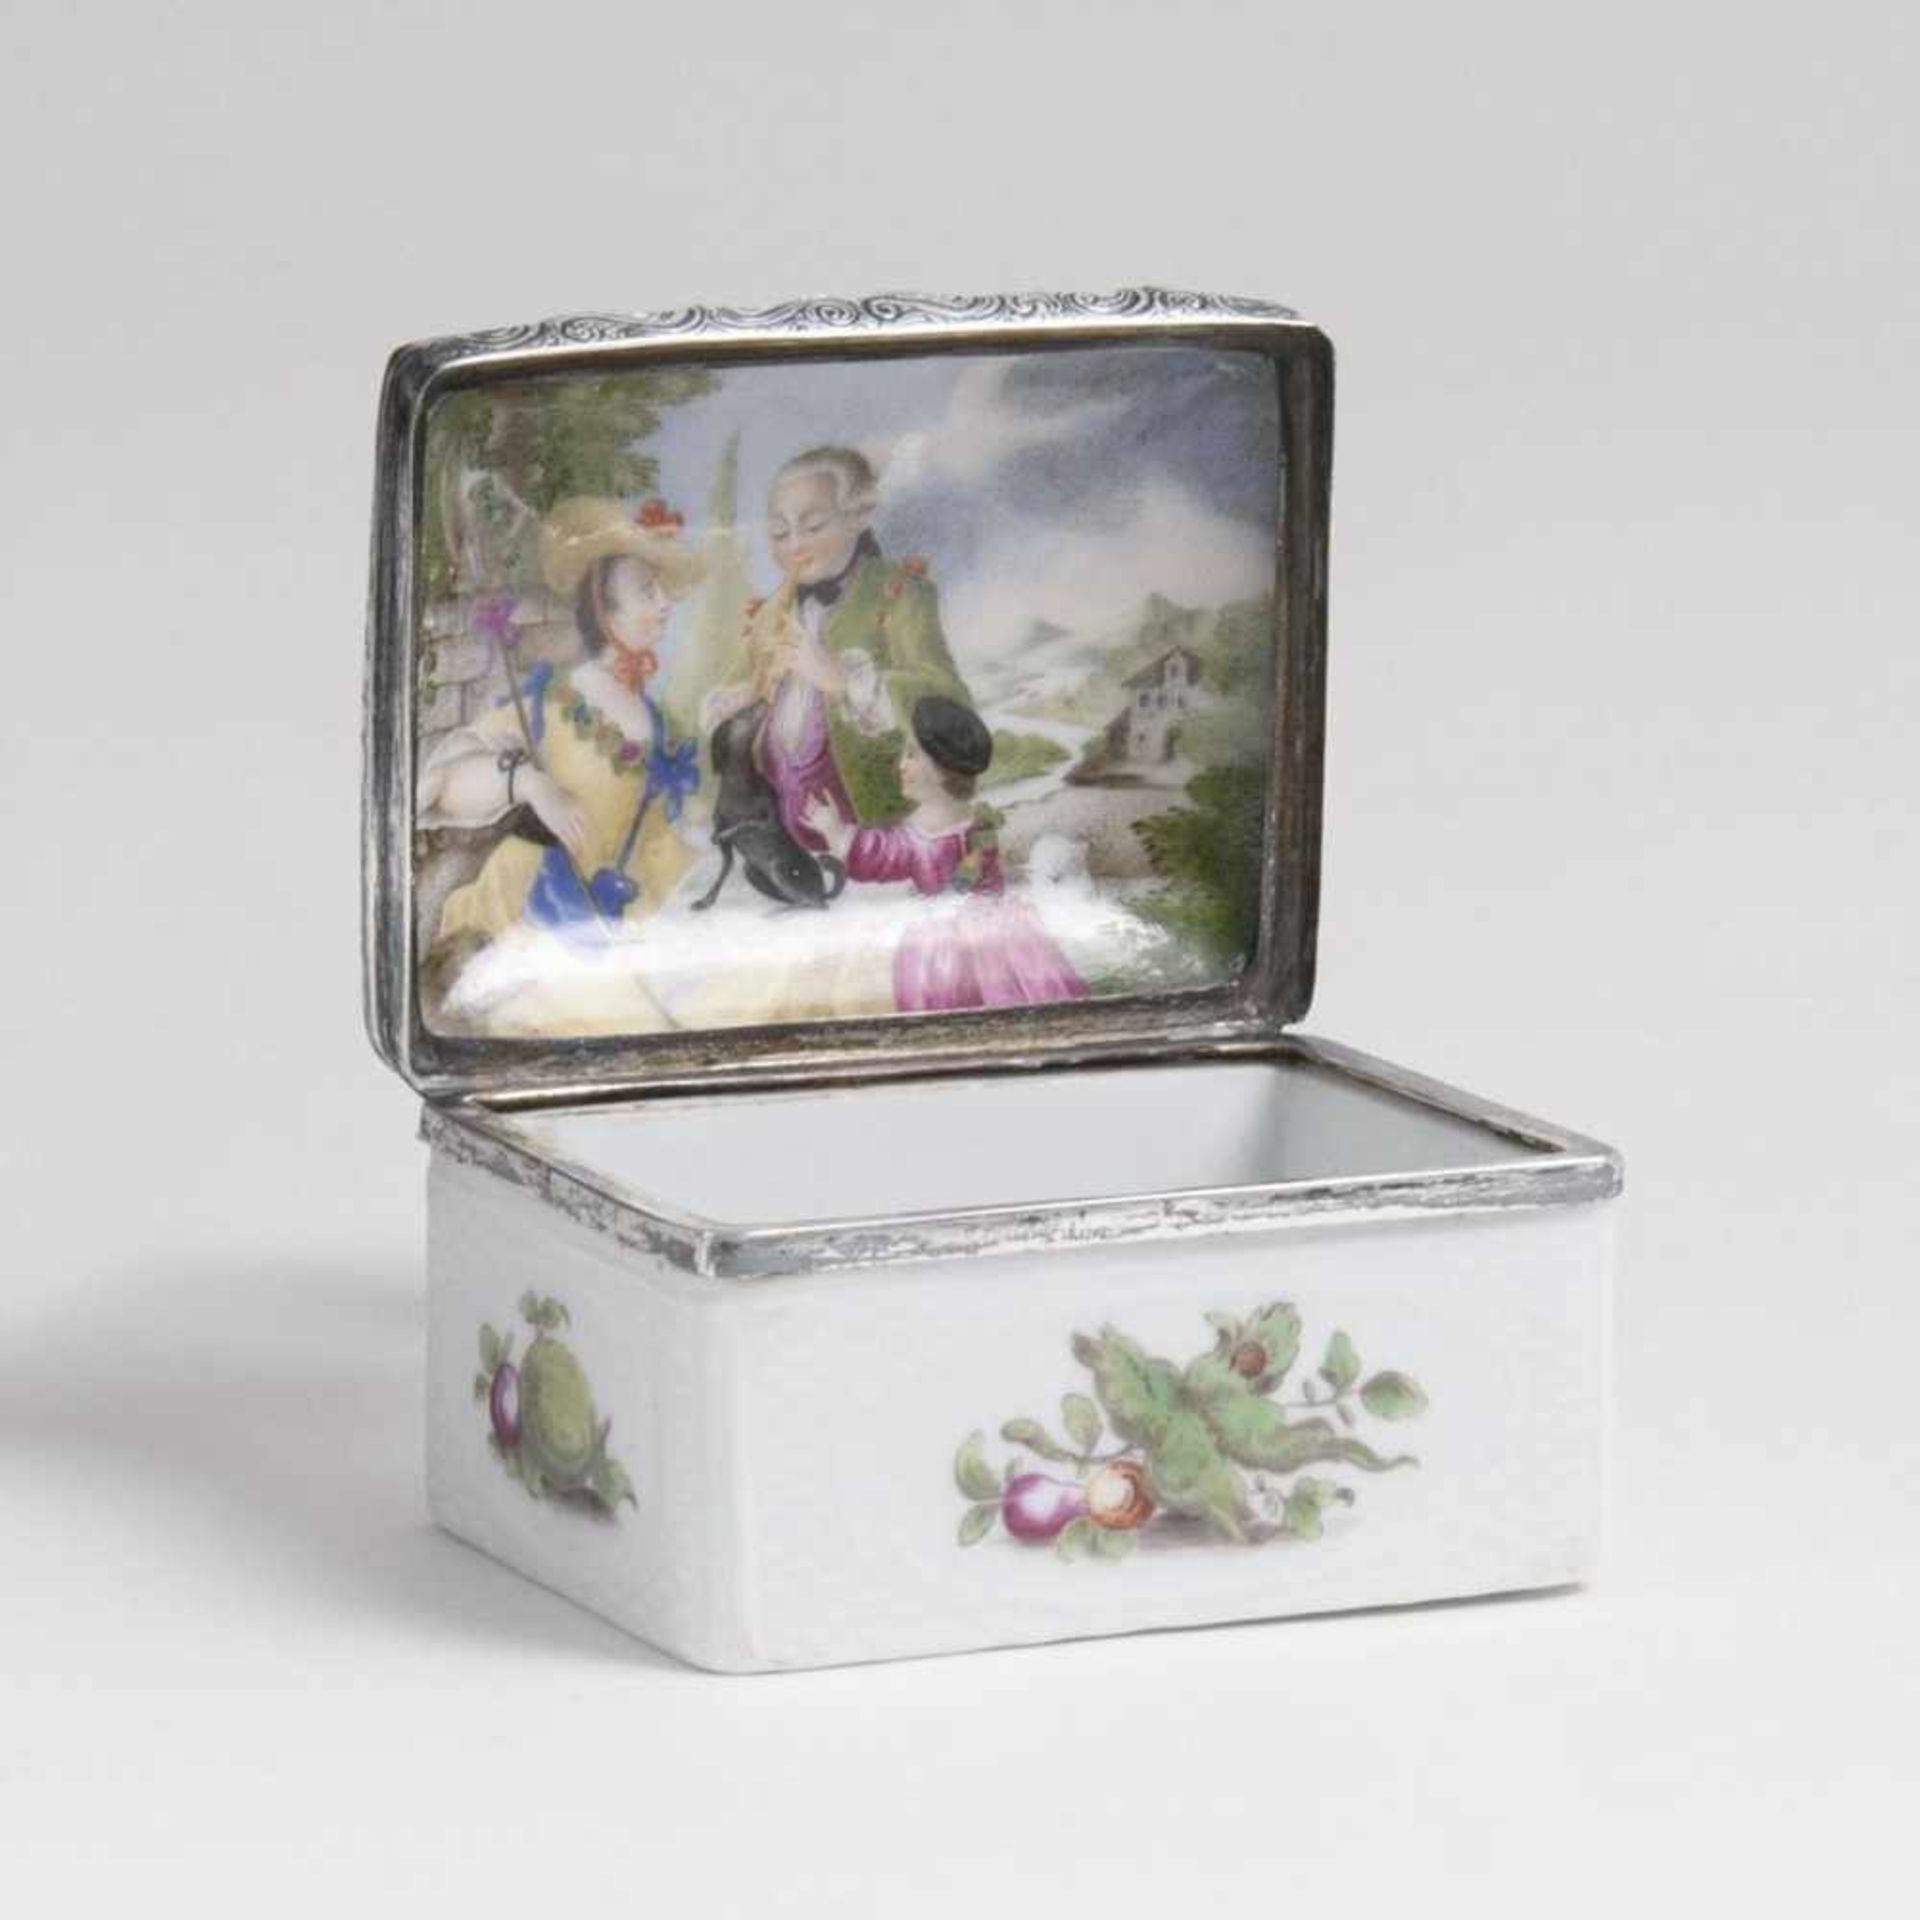 A rare Copenhagen Snuff Box with Flowers and Pastoral SceneRoyal Copenhagen, around 1780. Porcelain.